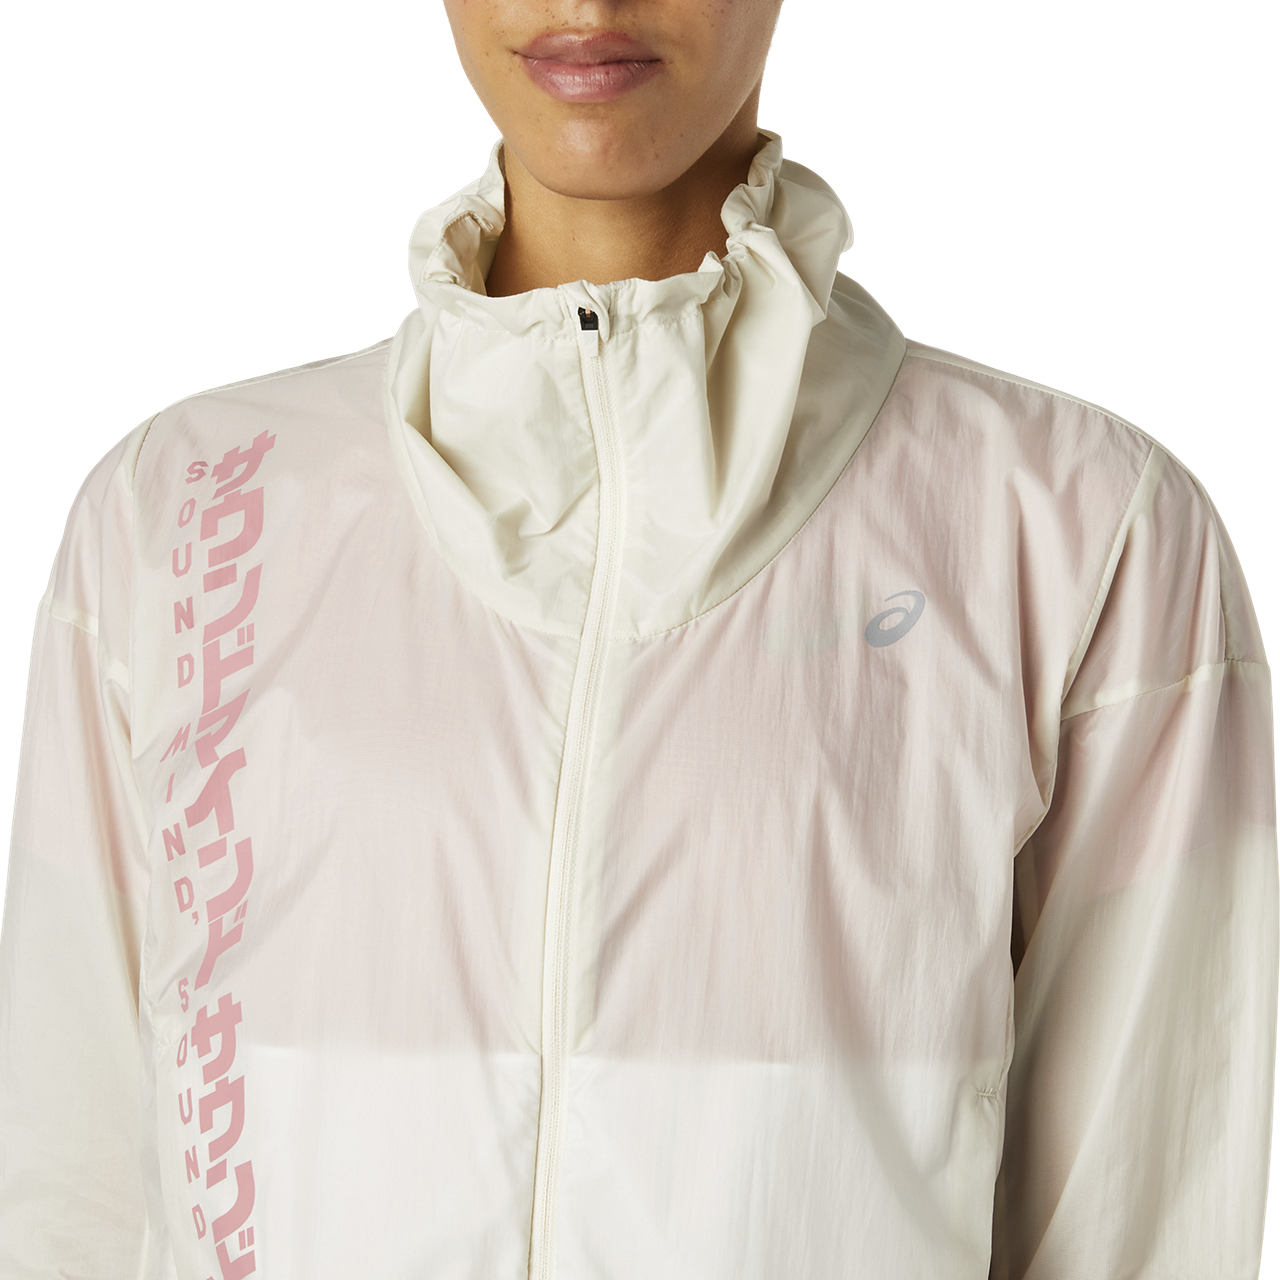 Asics RUN JACKET, ženska tekaška jakna, bela | Intersport